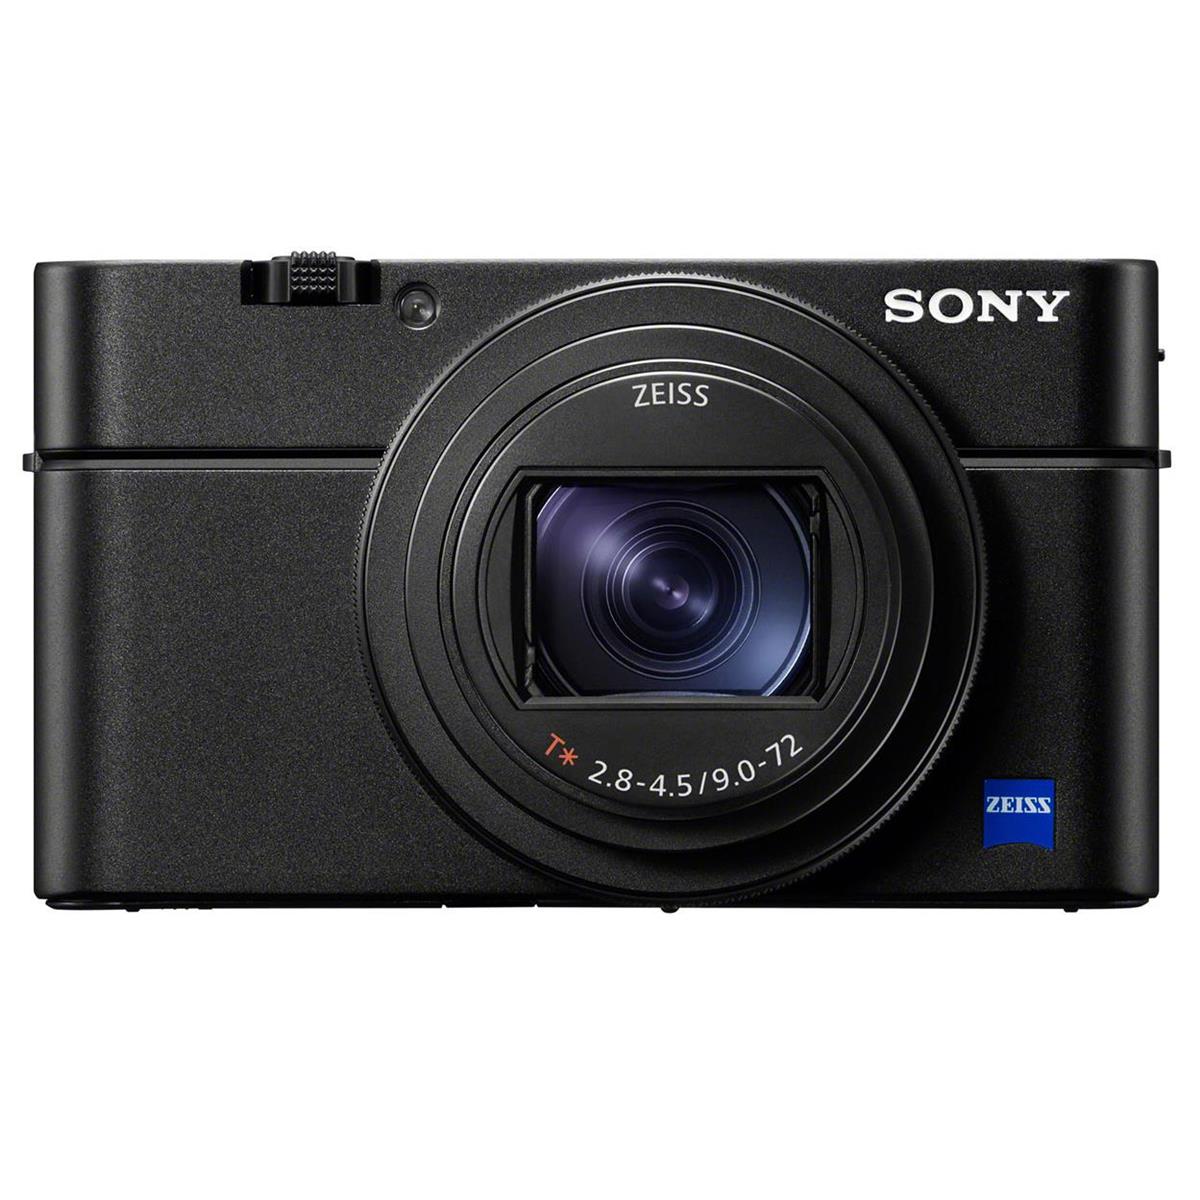 Sony RX100 VII Cyber-shot Digital Camera